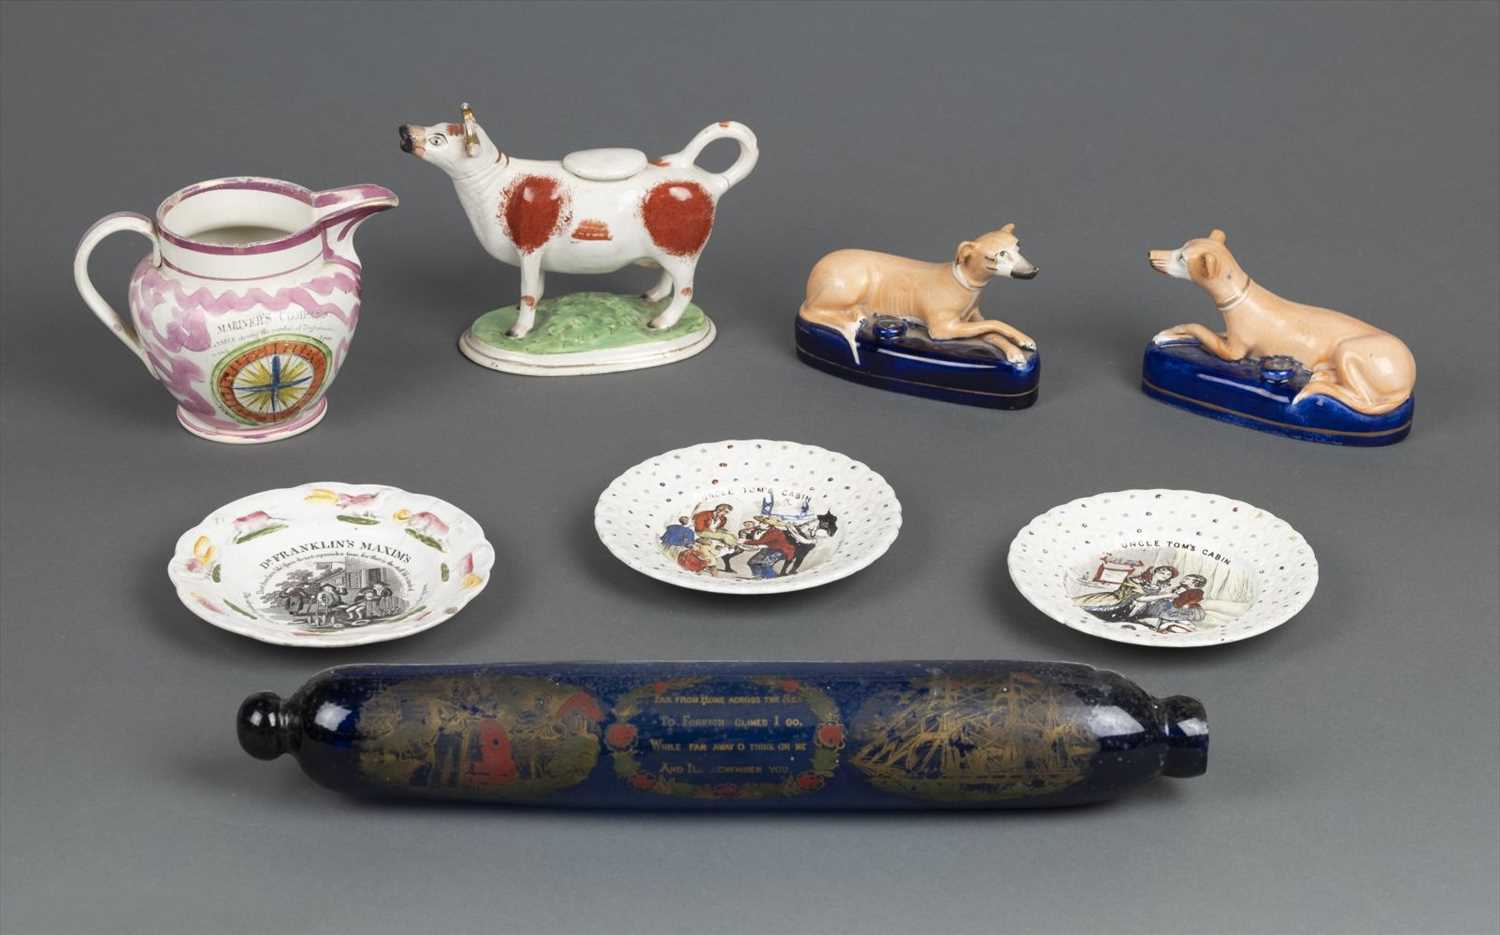 Lot 2 - Decorative ceramics. A mixed collection including a cow creamer